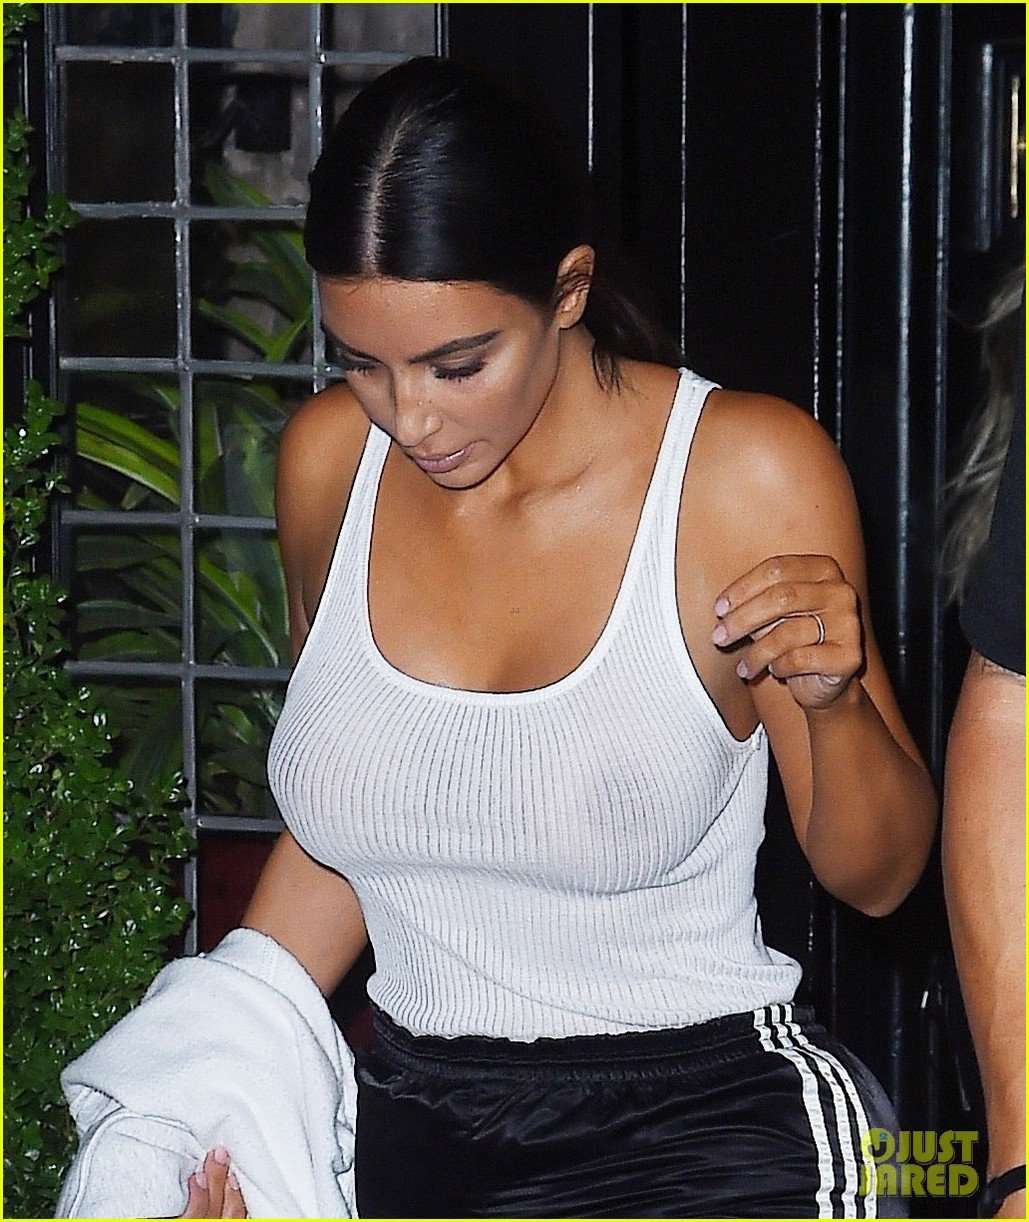 Kim Kardashian Goes Braless While Wearing a See-Through Top: Photo 3762479, Kim Kardashian Photos